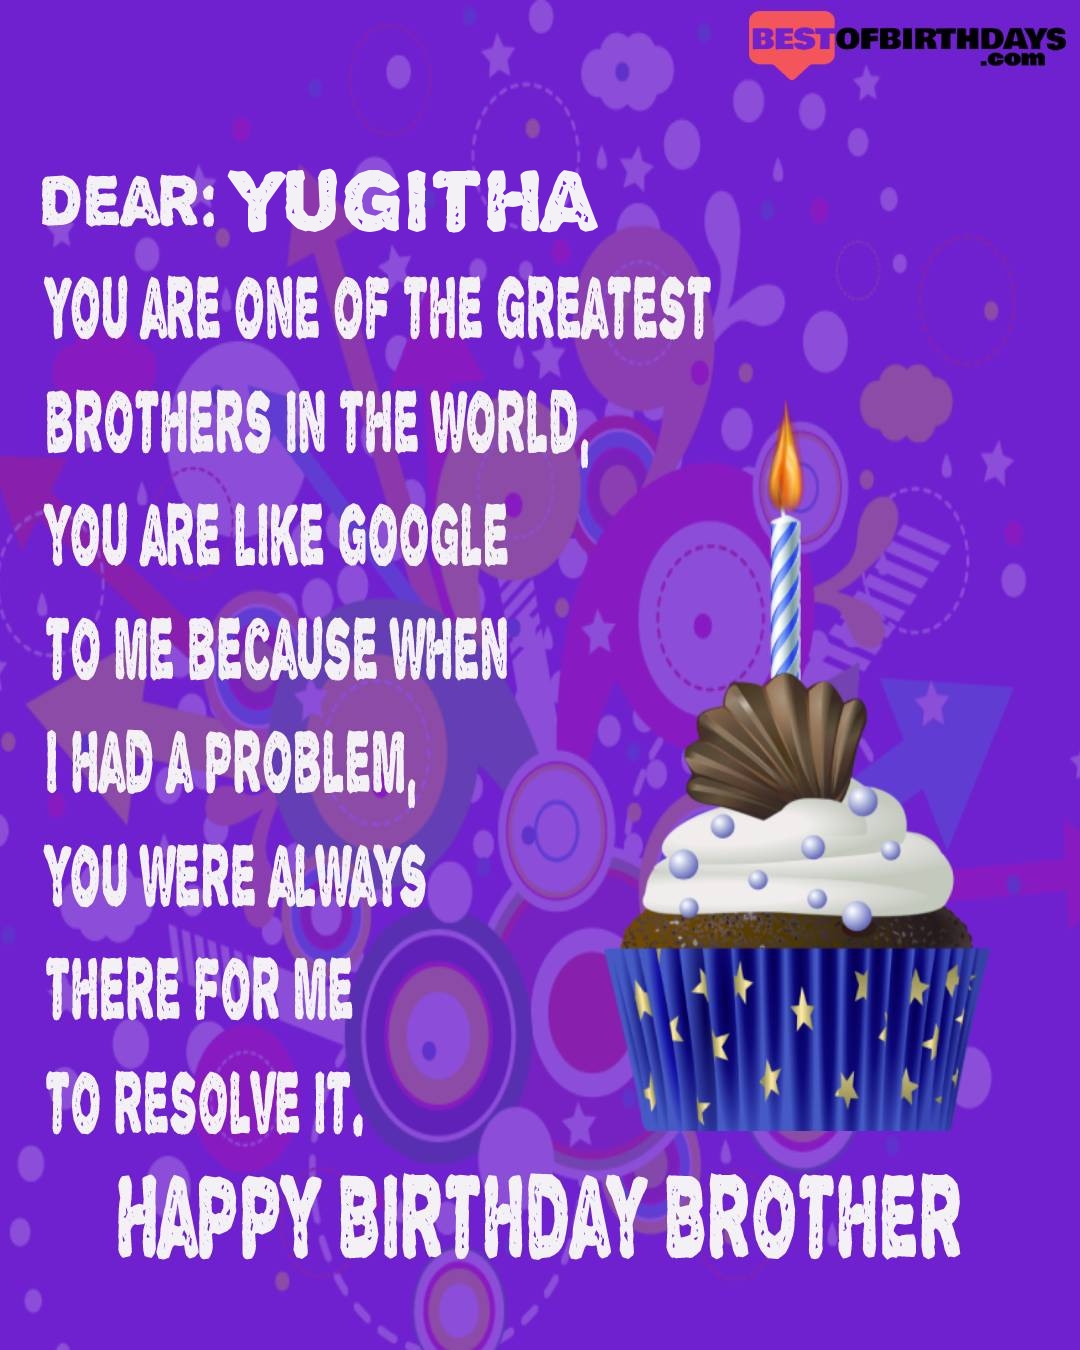 Happy birthday yugitha bhai brother bro